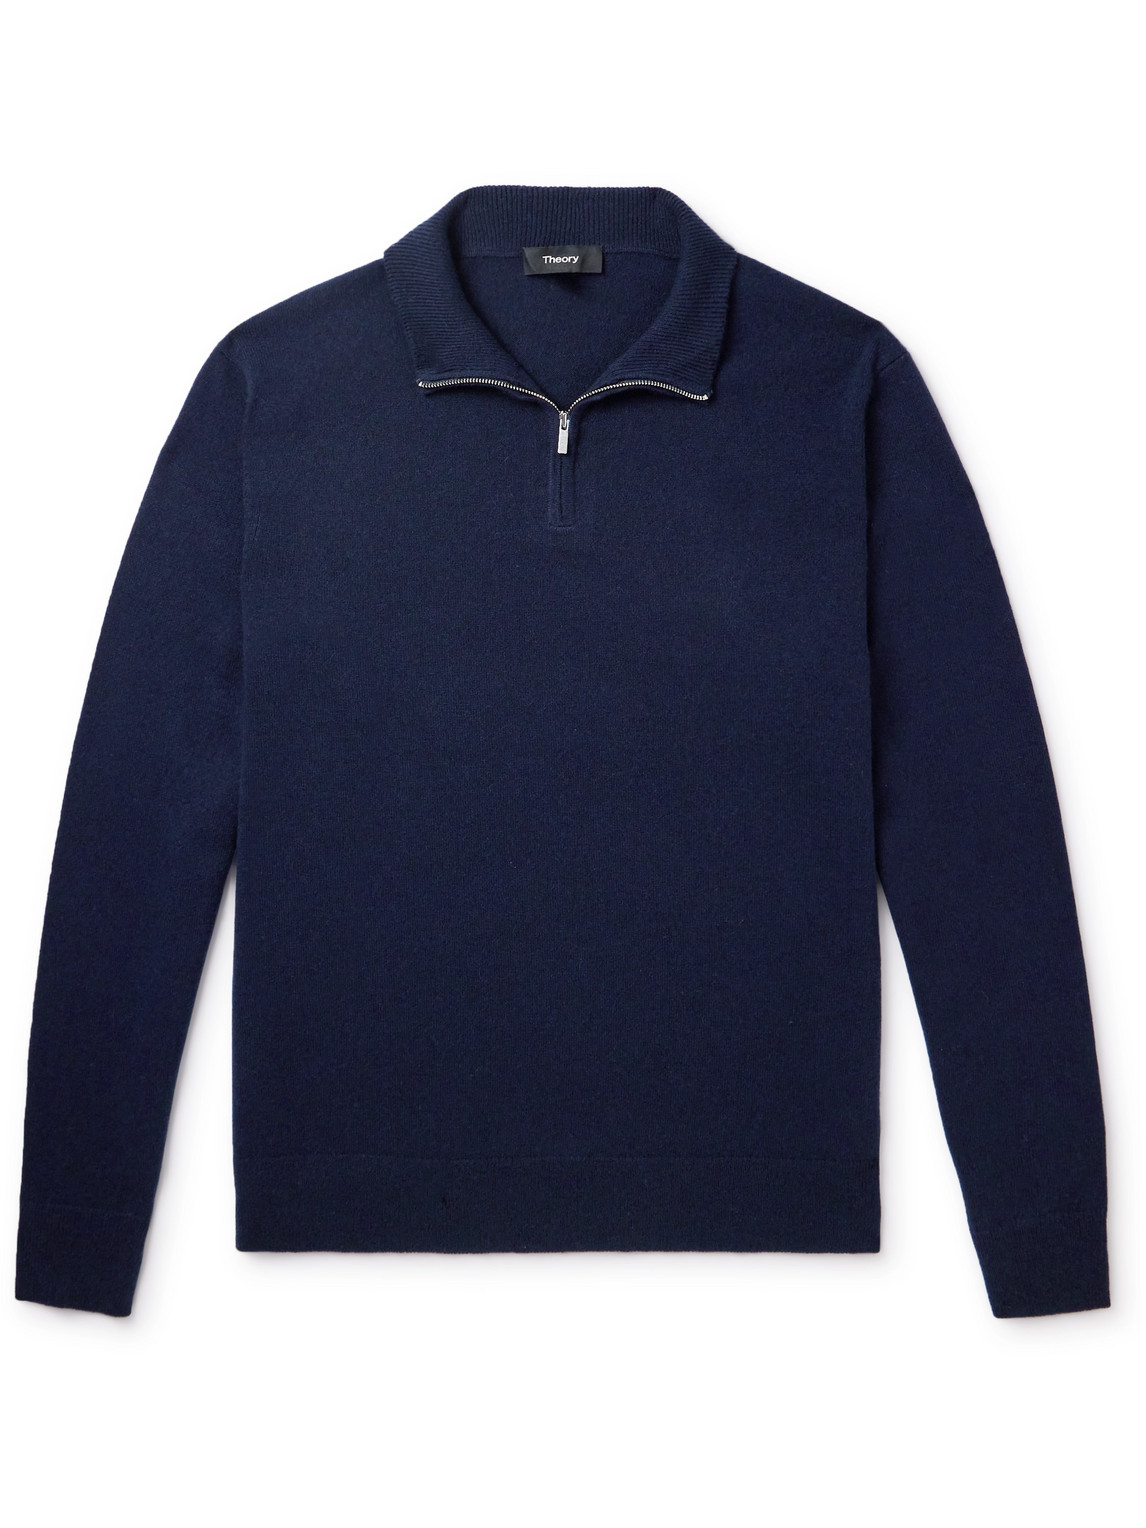 Hilles Cashmere Half-Zip Sweater